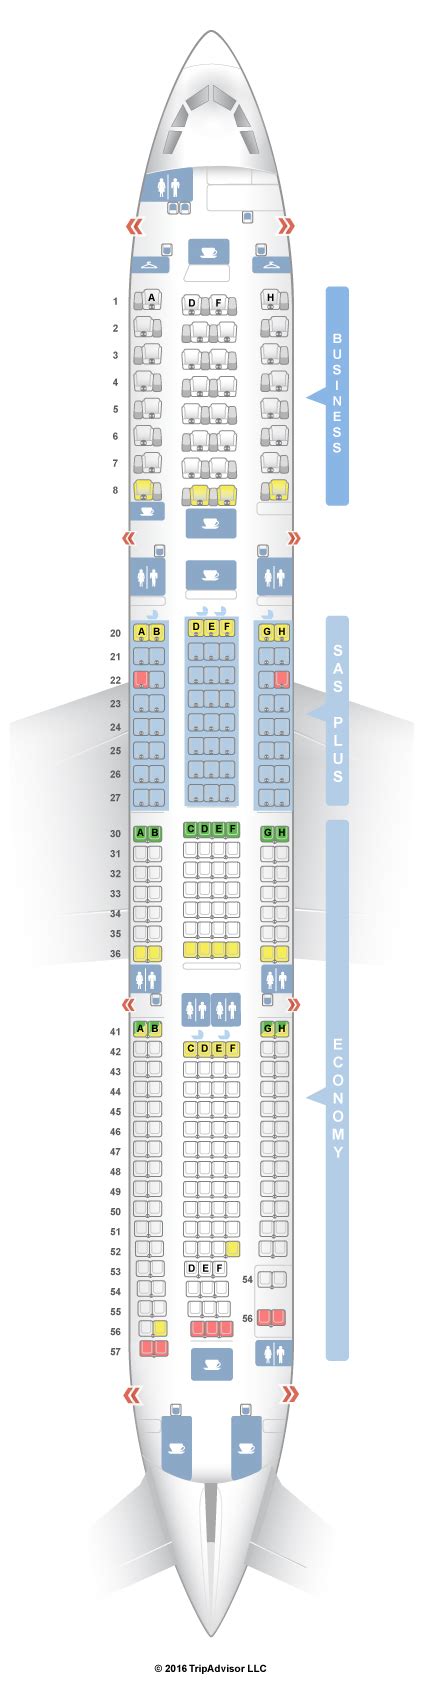 Seatguru Seat Map Sas Airbus A330 300 333 Seatguru